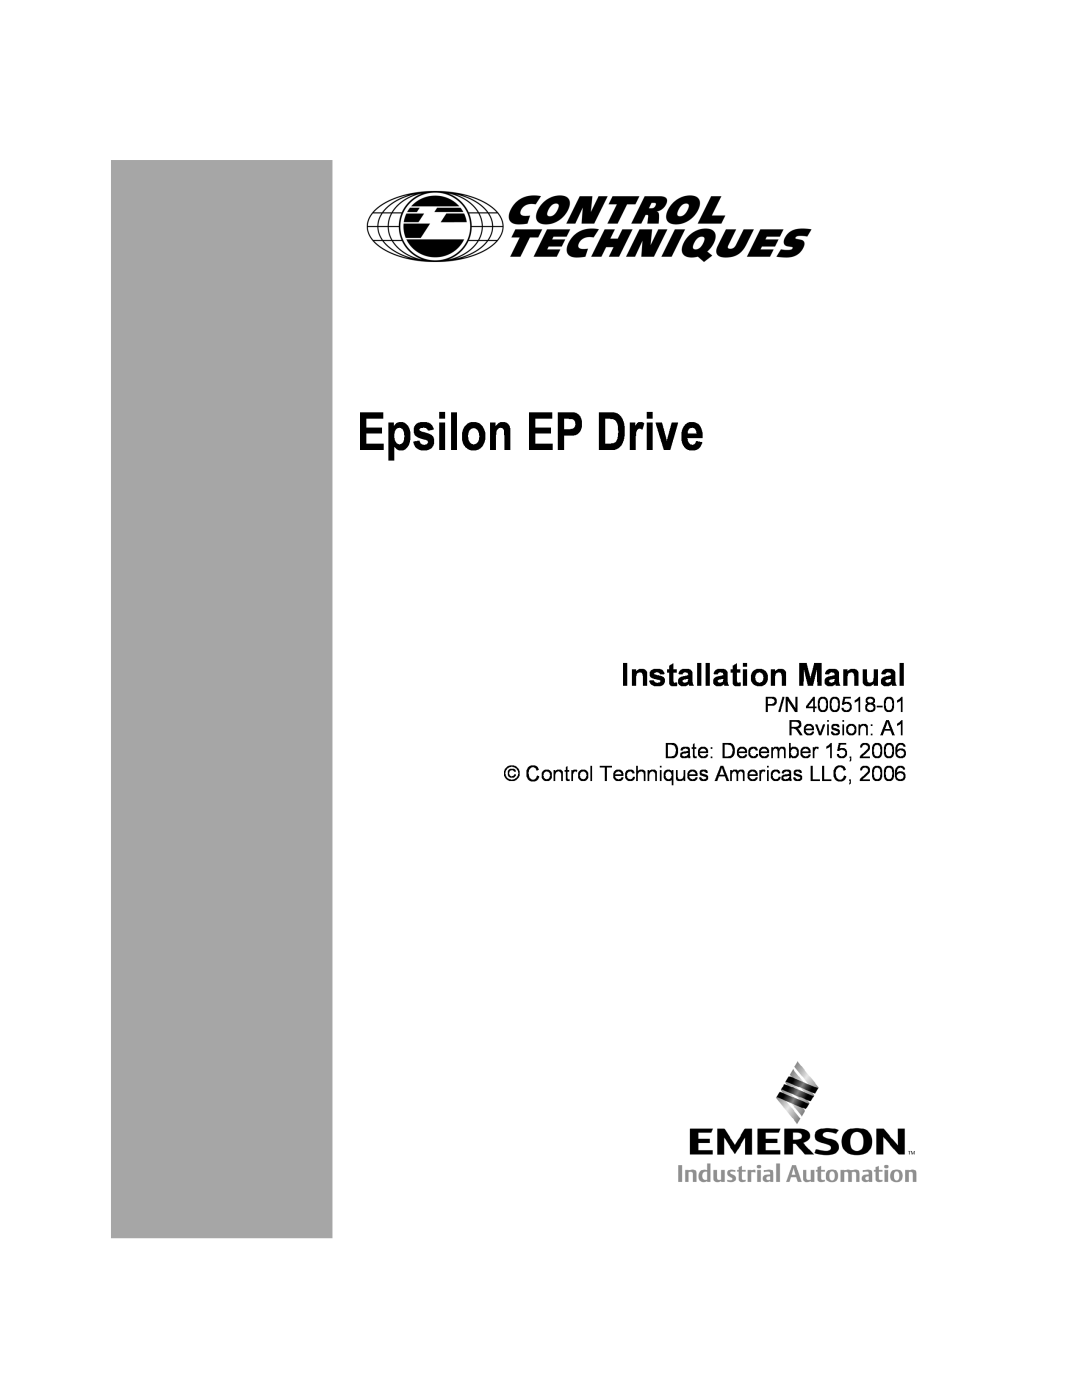 Emerson 400518-01 installation manual Installation Manual, Epsilon EP Drive 